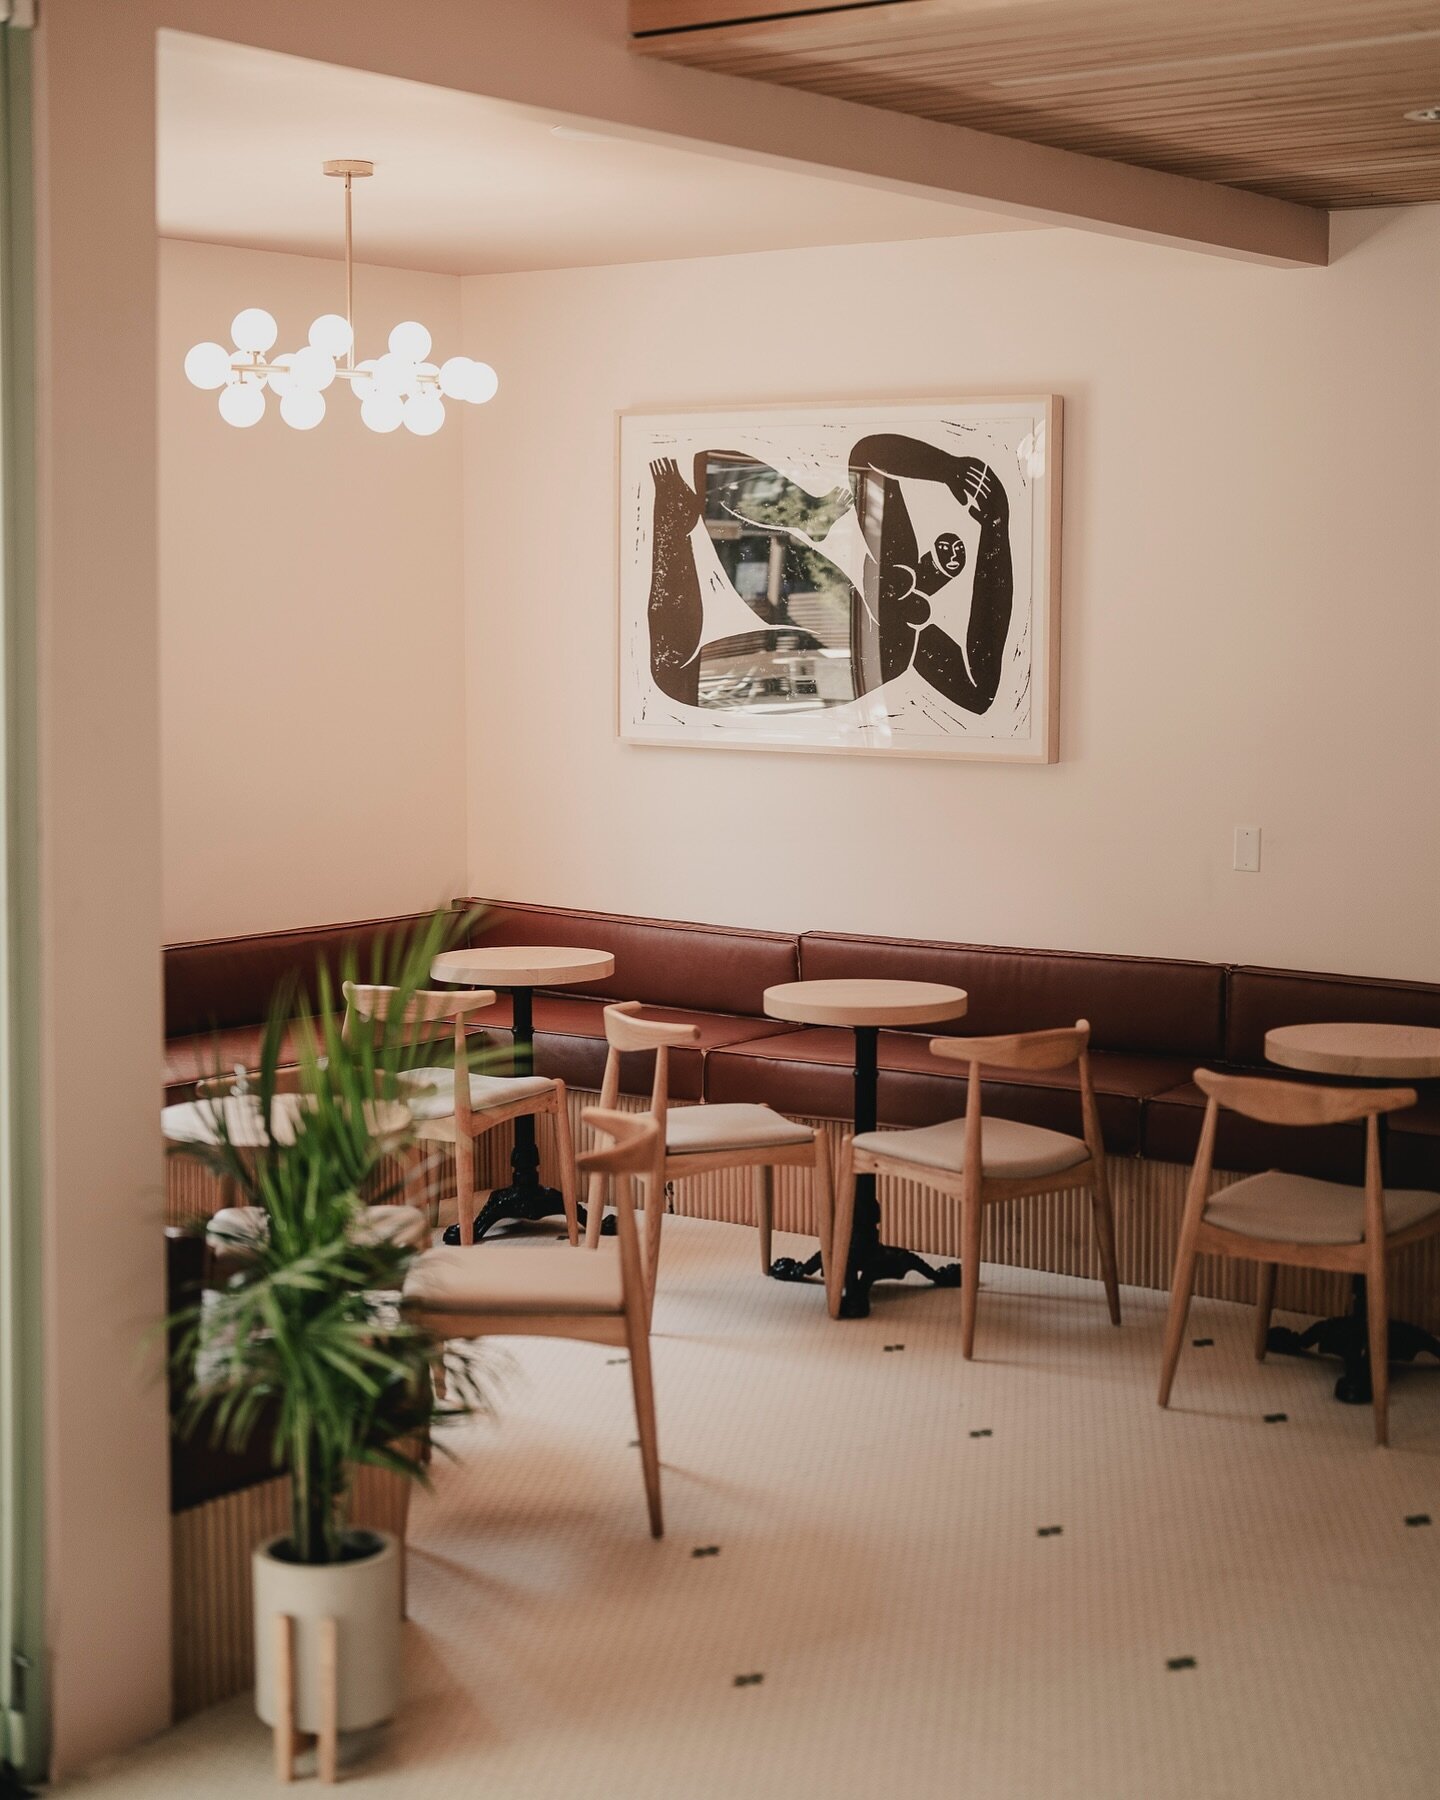 Pretty little vignette from @daydreameraustin ~

#interiors #interiorphotography #restaurantphotography #cocktailbar #austin